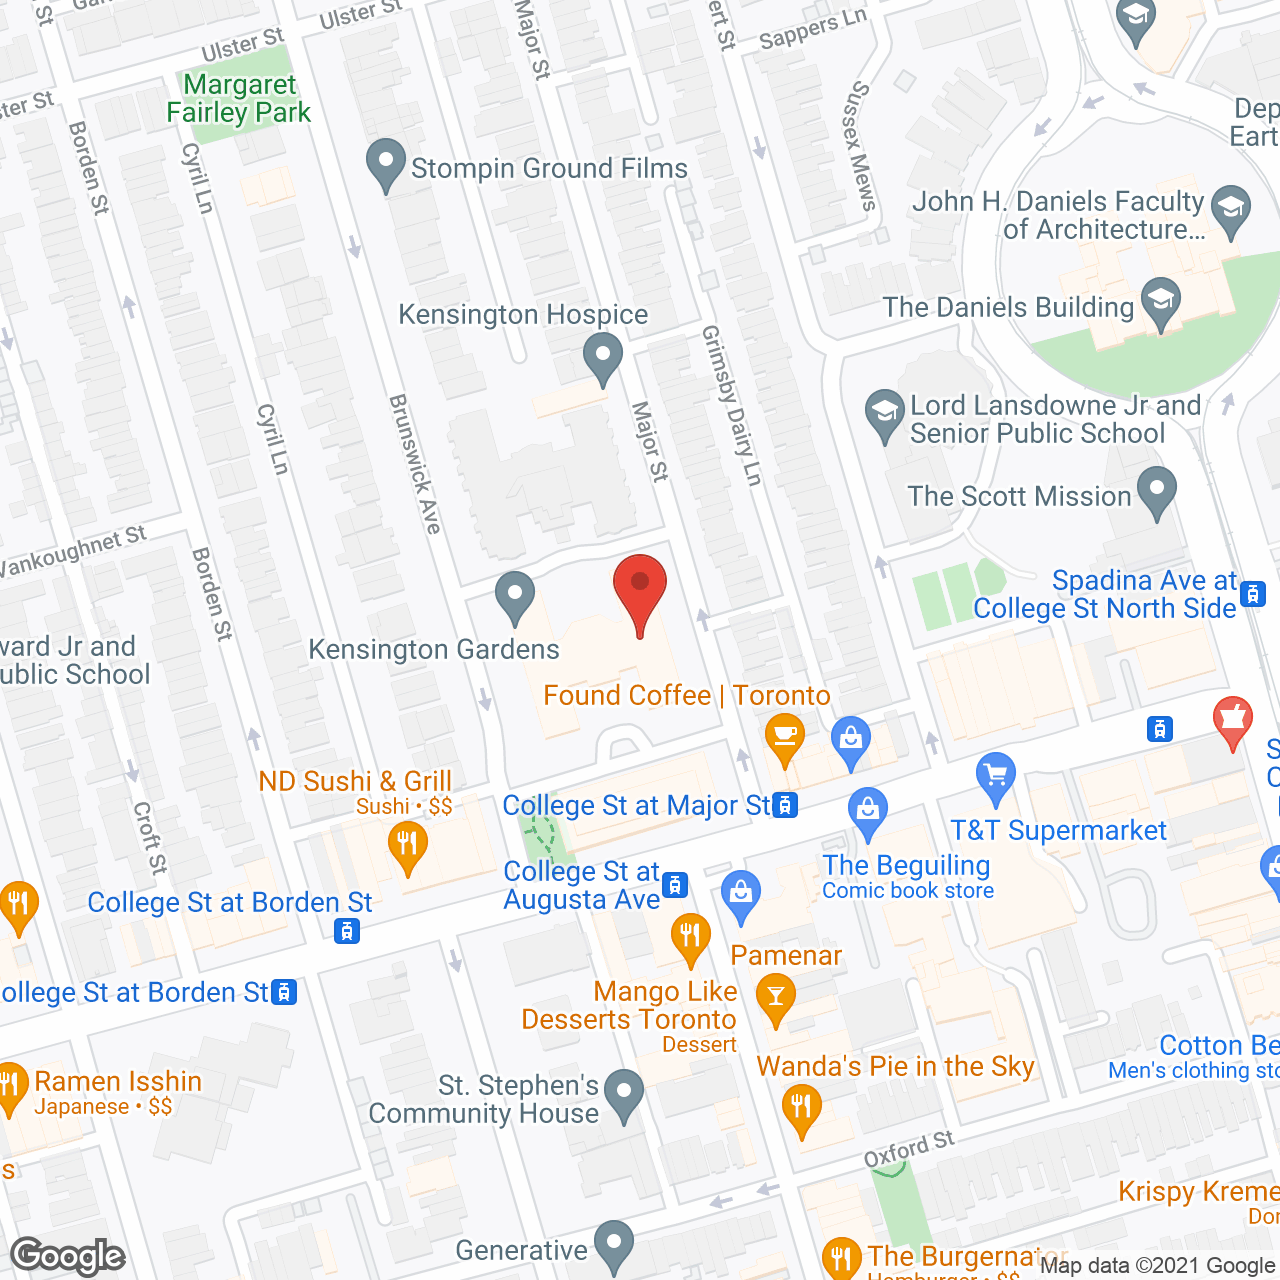 Kensington Gardens in google map